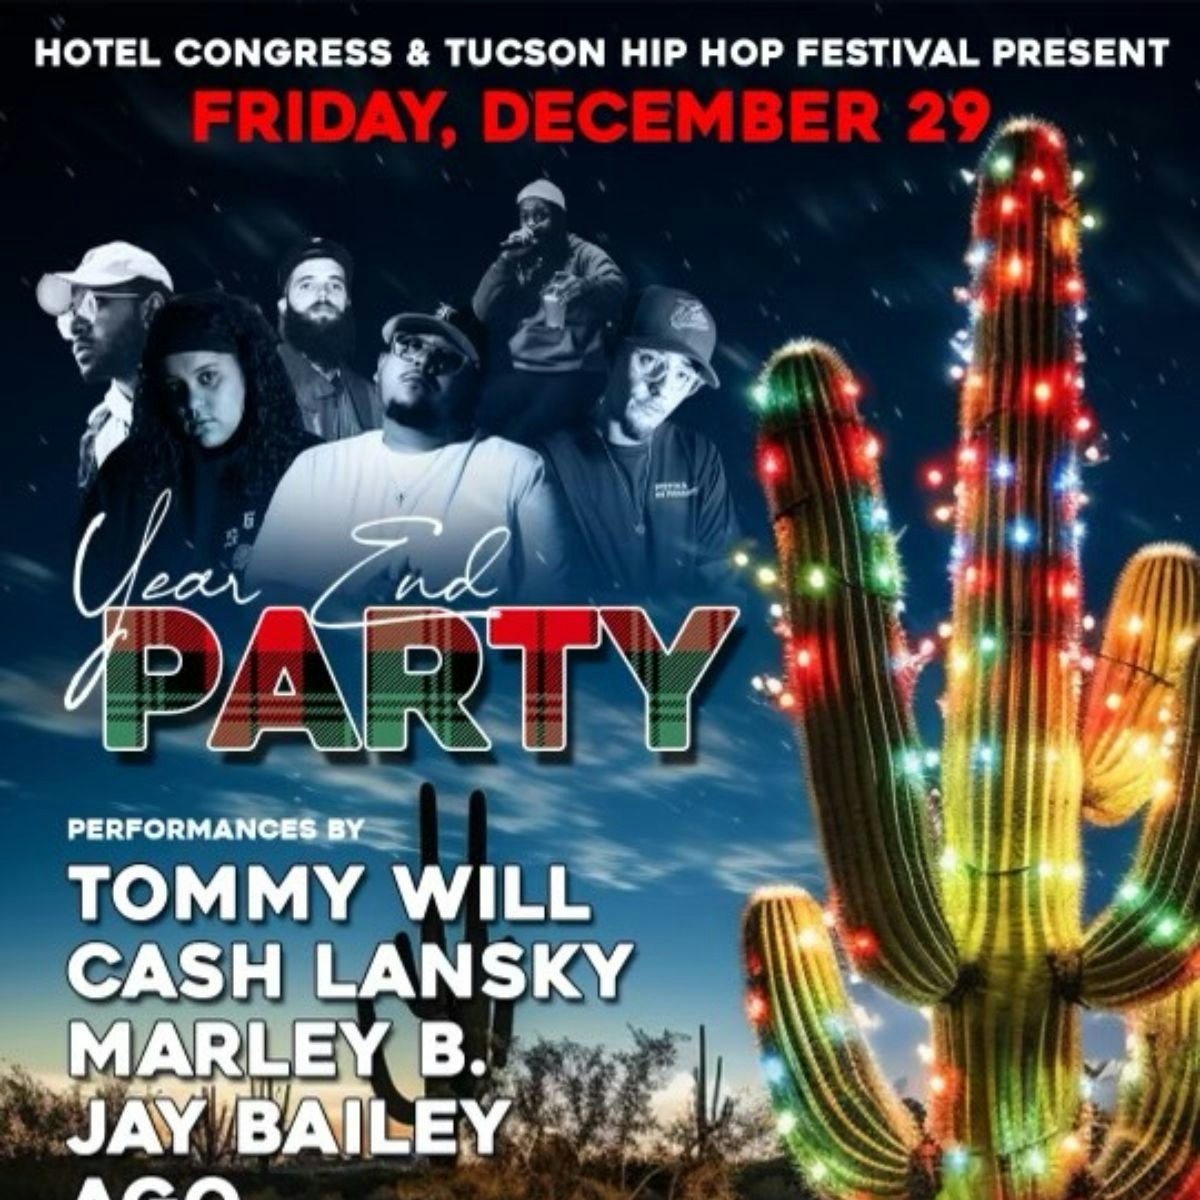 Tucson Hip Hop Festival Presents: Year End Party!